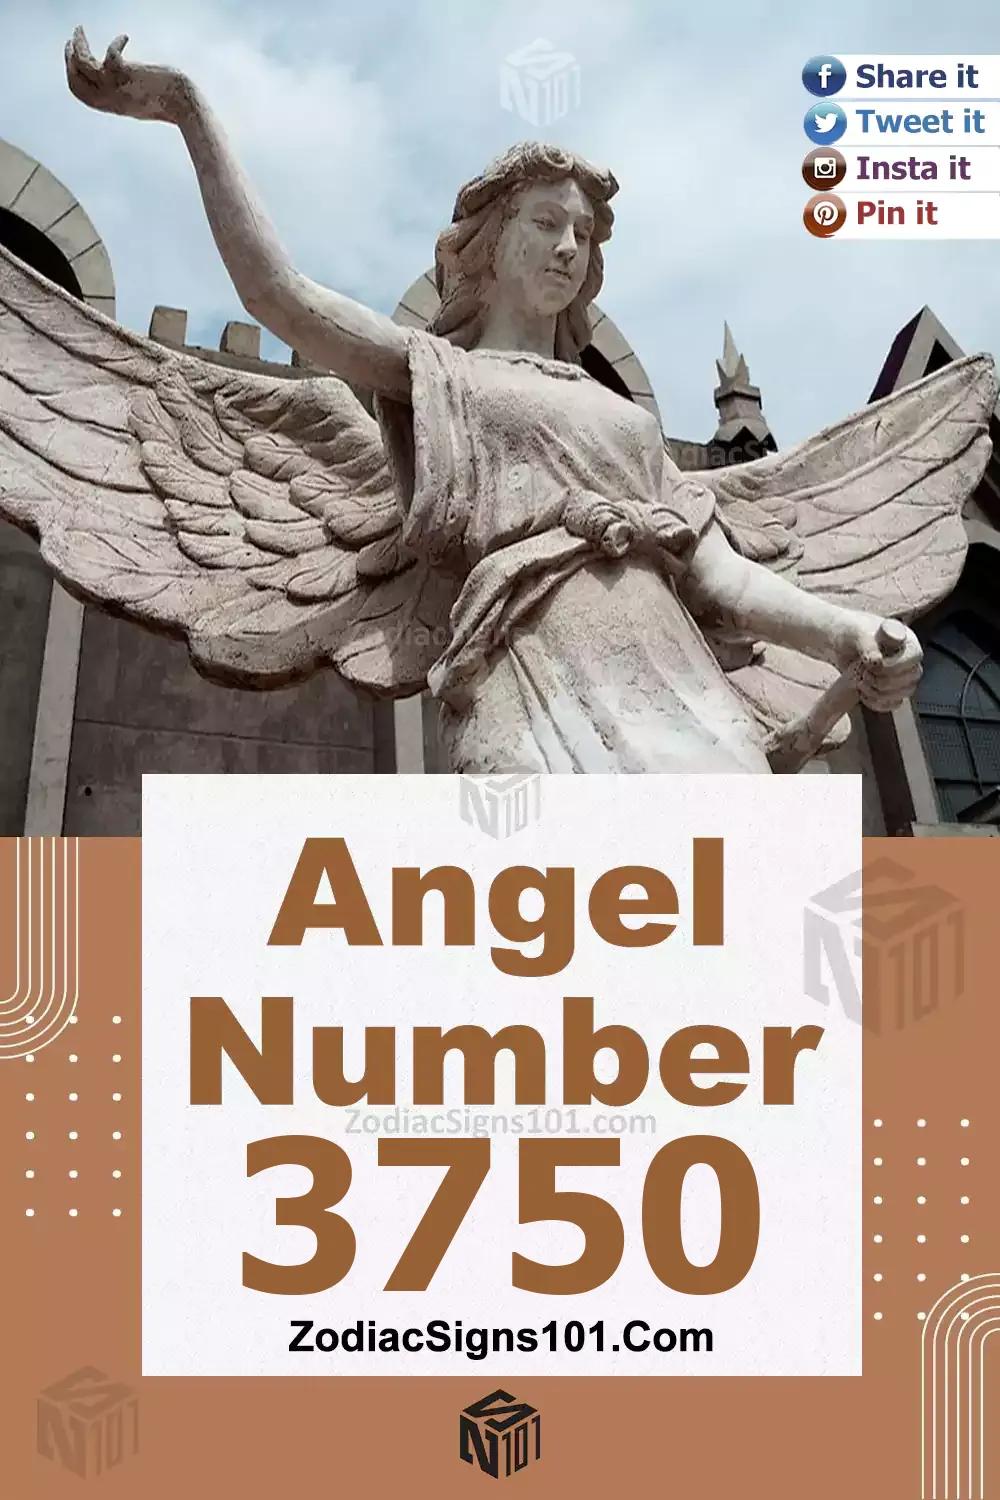 3750-Angel-Number-Meaning.jpg